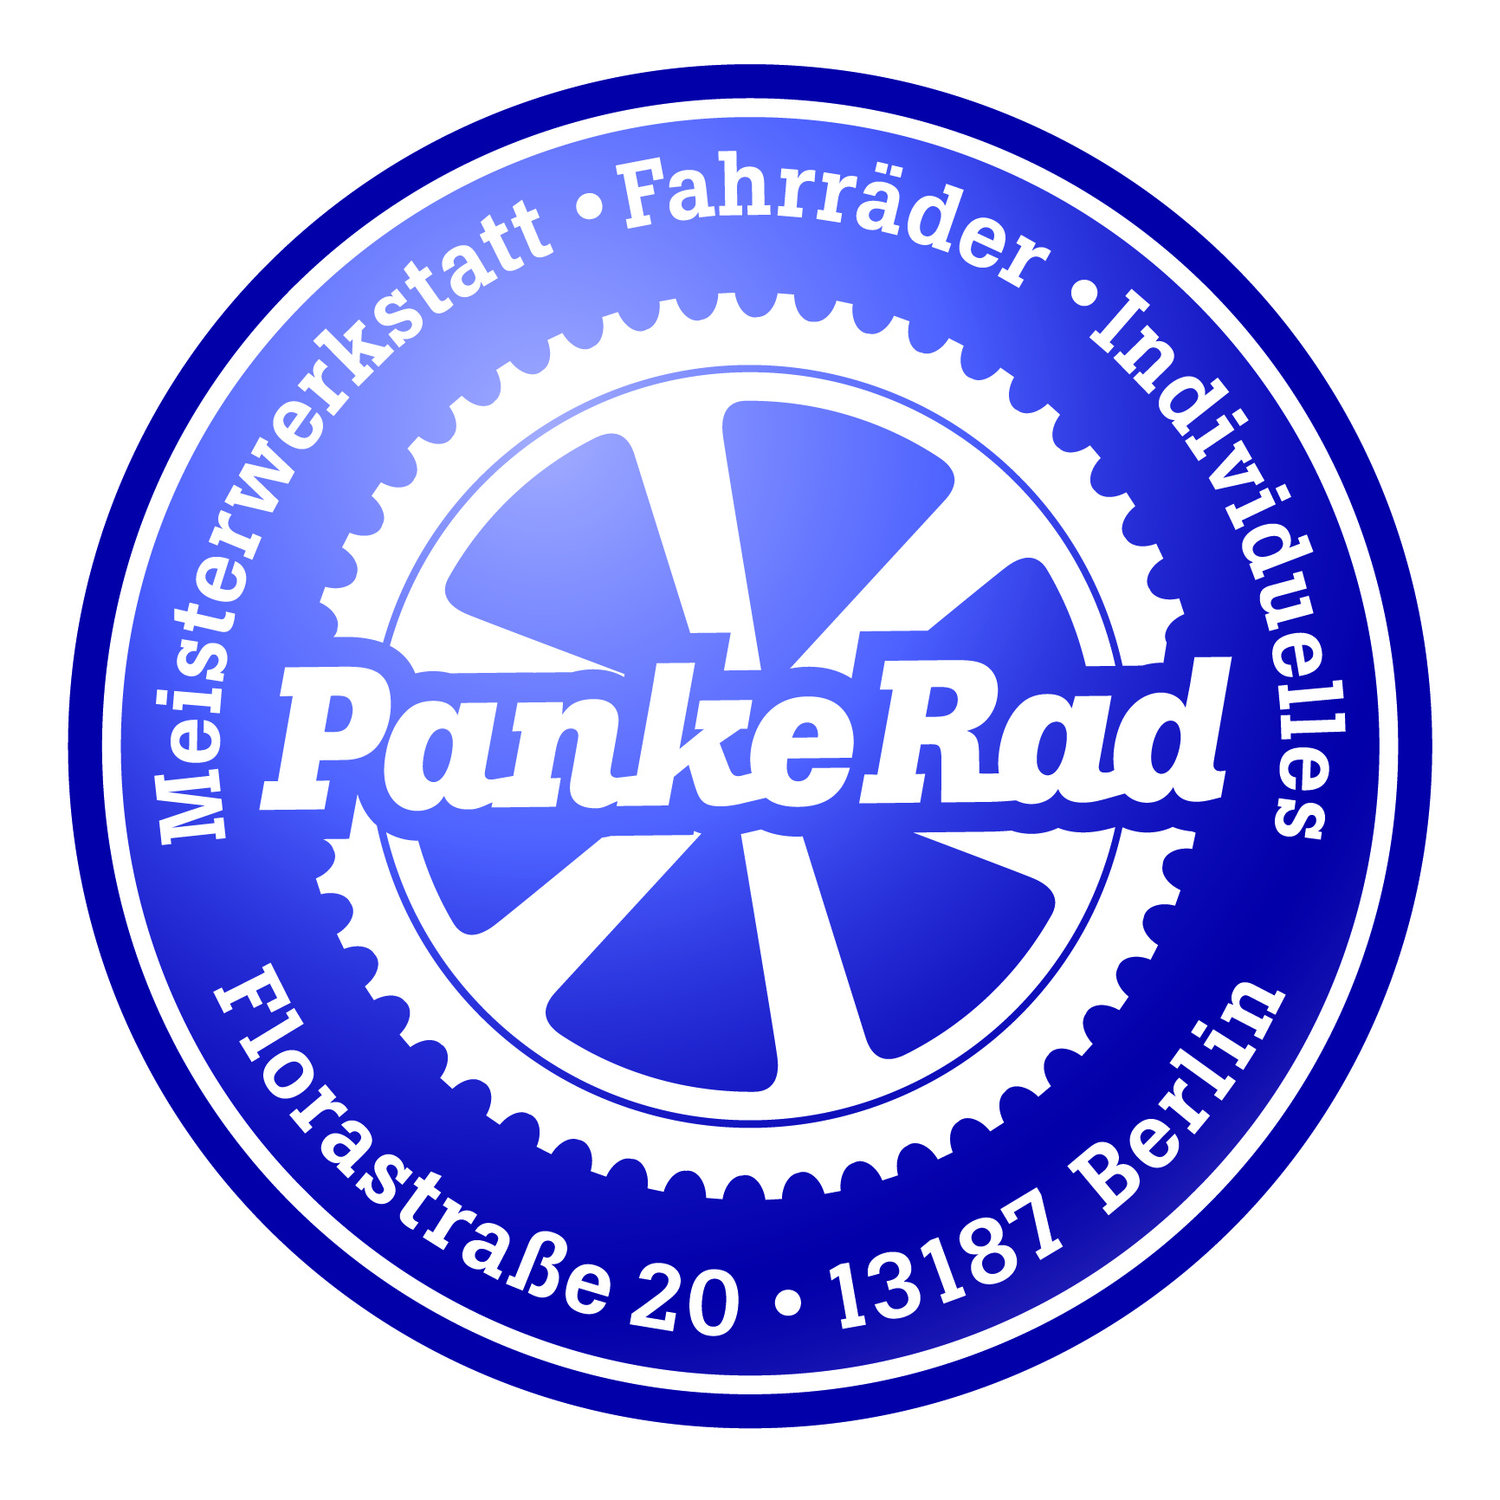 Pankerad - Fahrradladen mit Meisterwerkstatt in Pankow